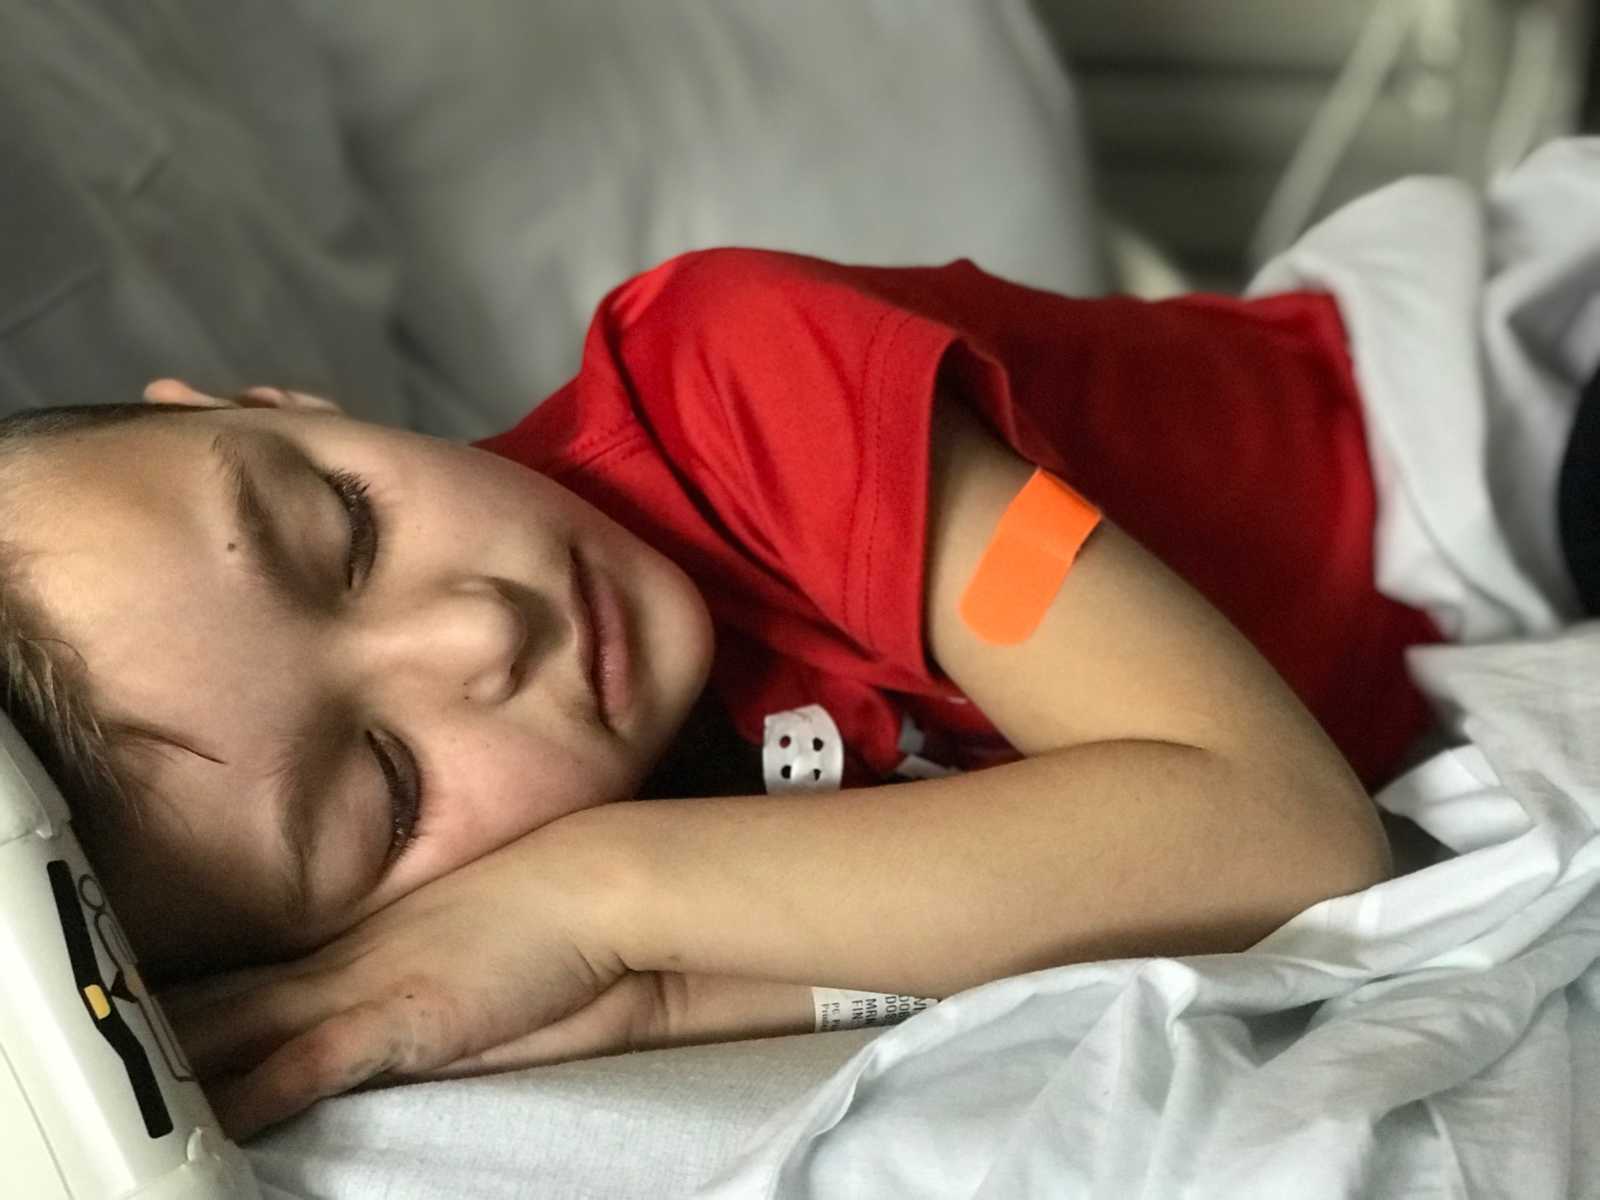 Little boy with leg tumor asleep in hospital bed